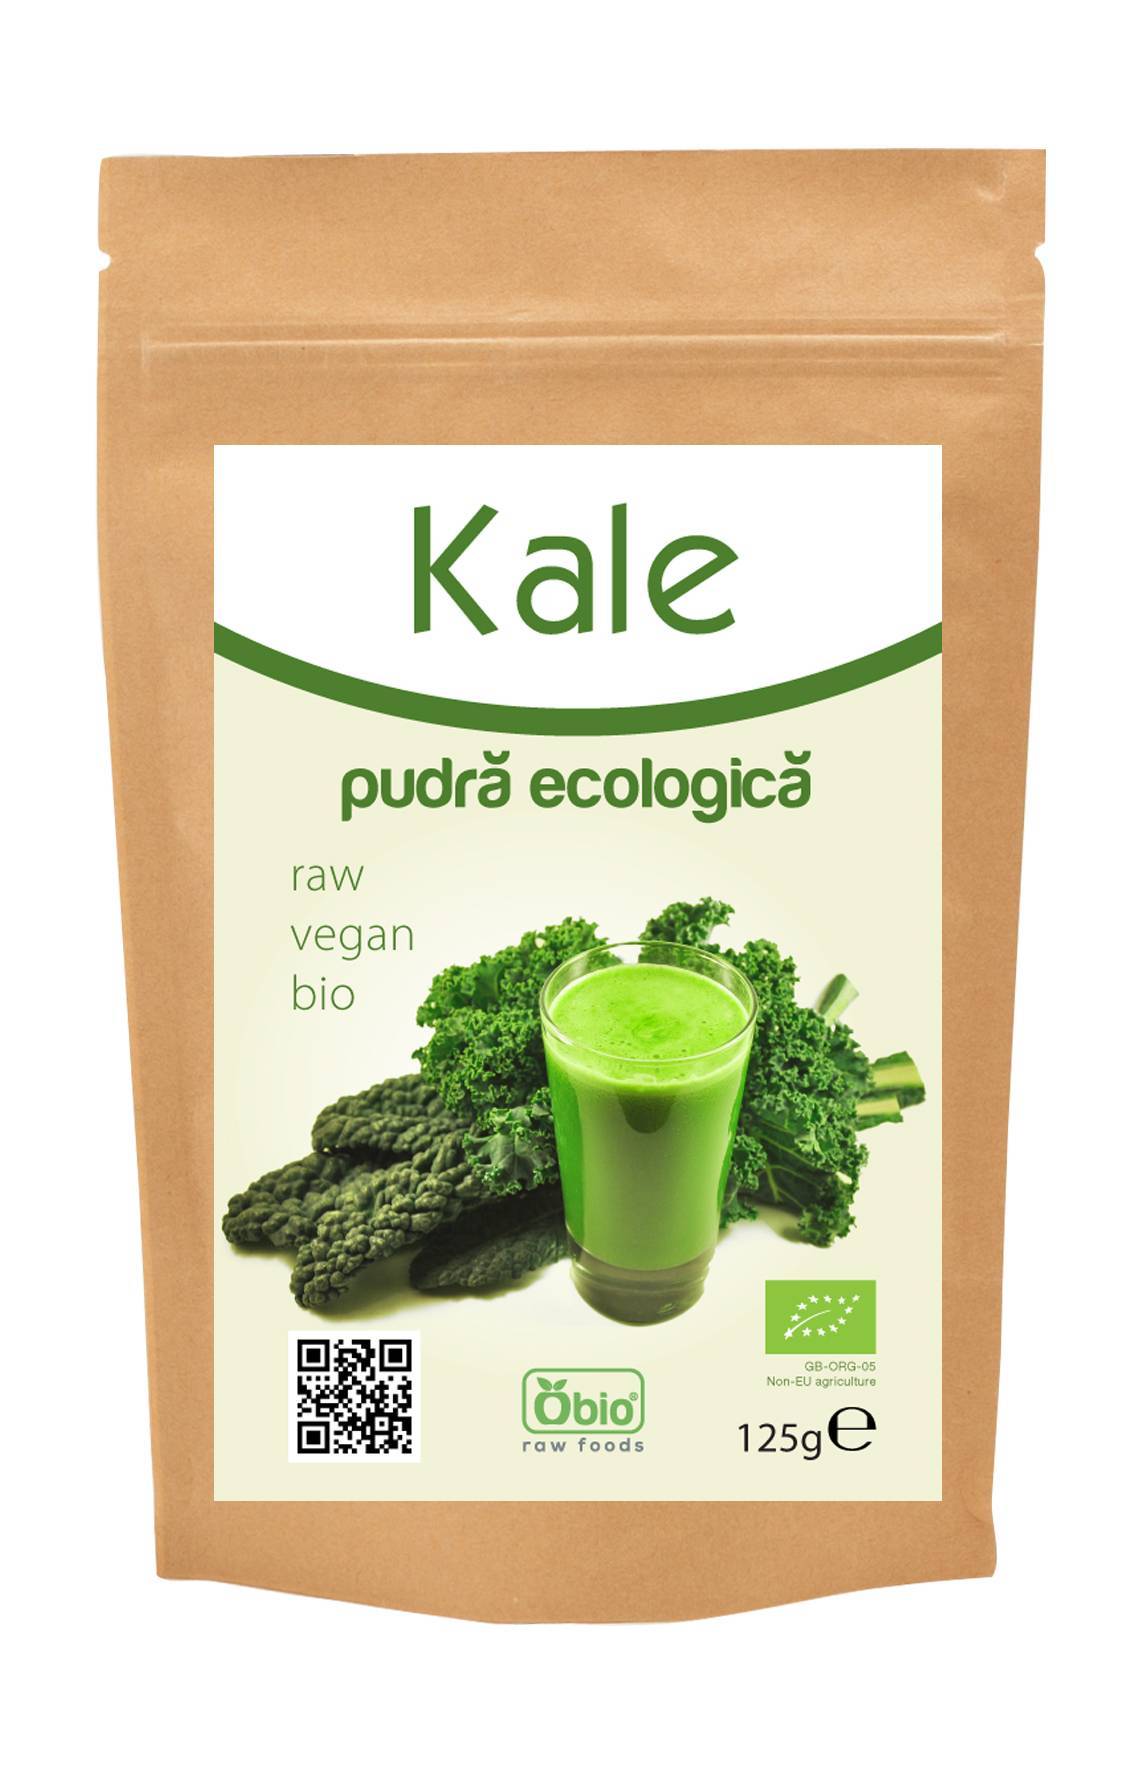 Kale pudra eco-bio 125g - obio